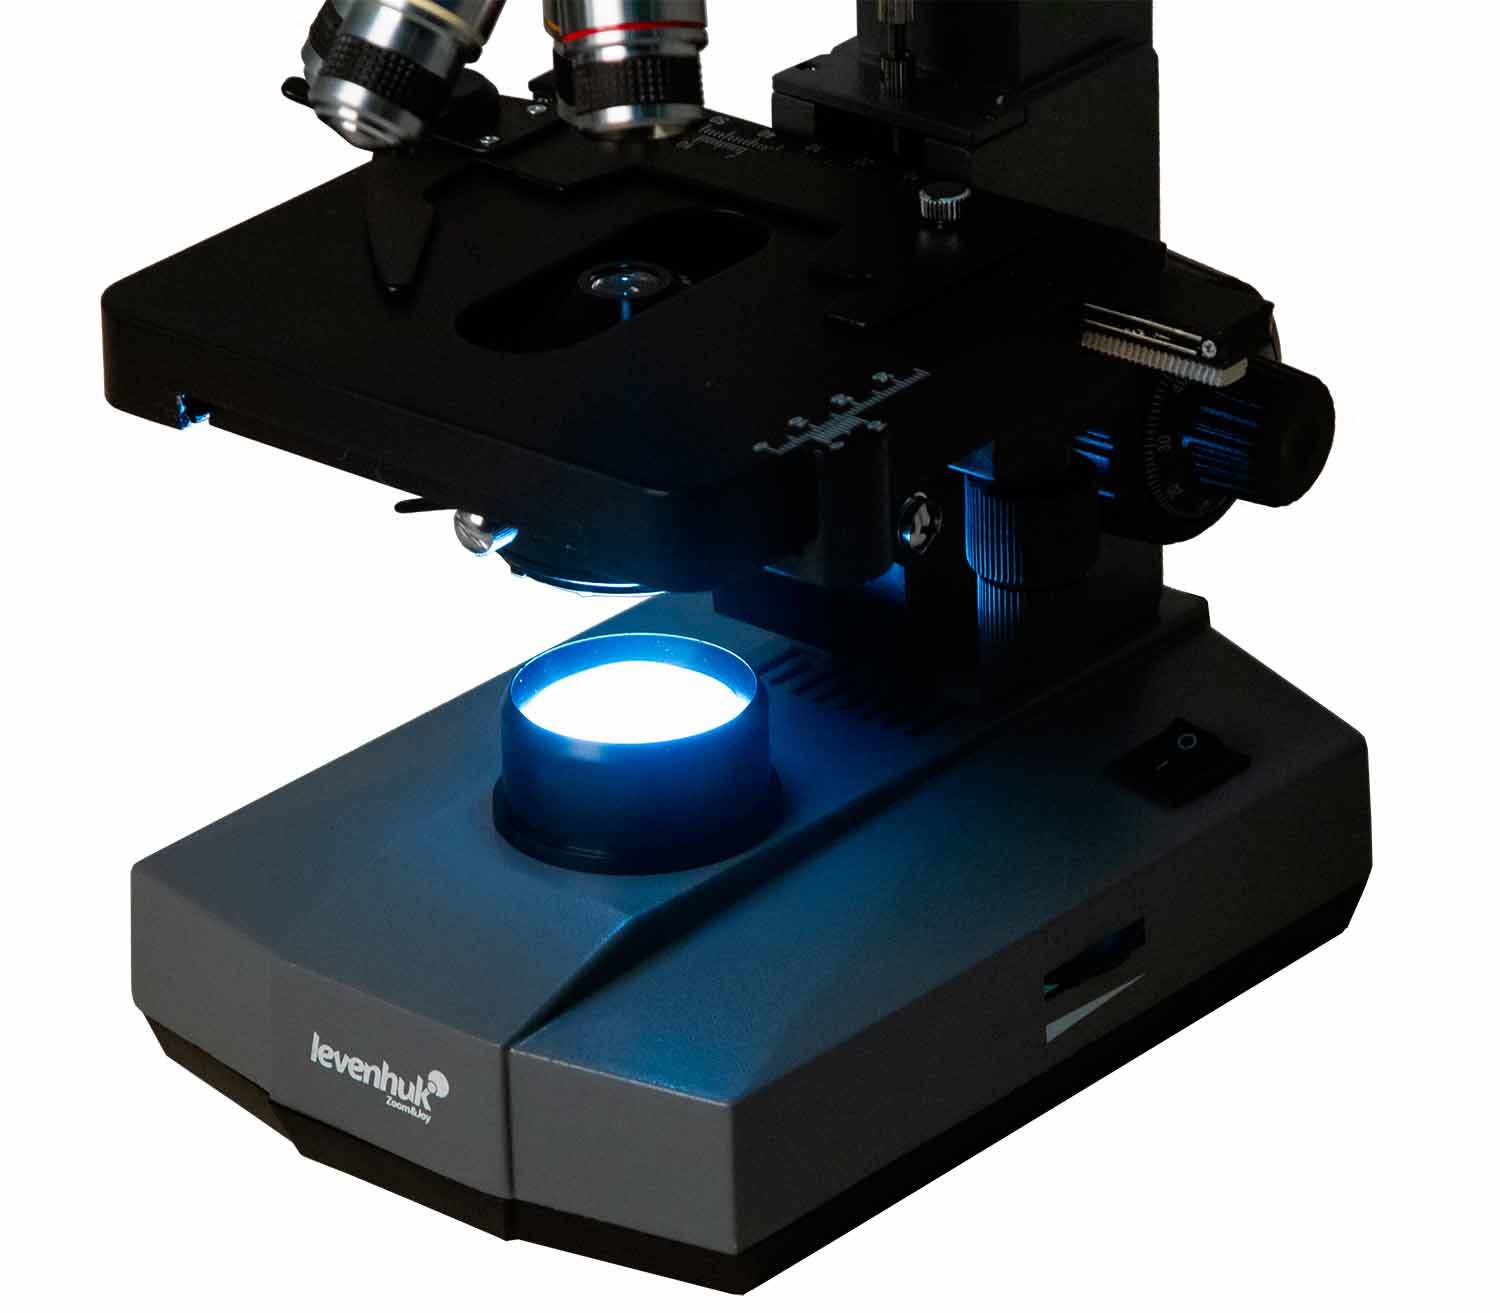 Microscopio Biológico Monocular Levenhuk 320 PLUS luz